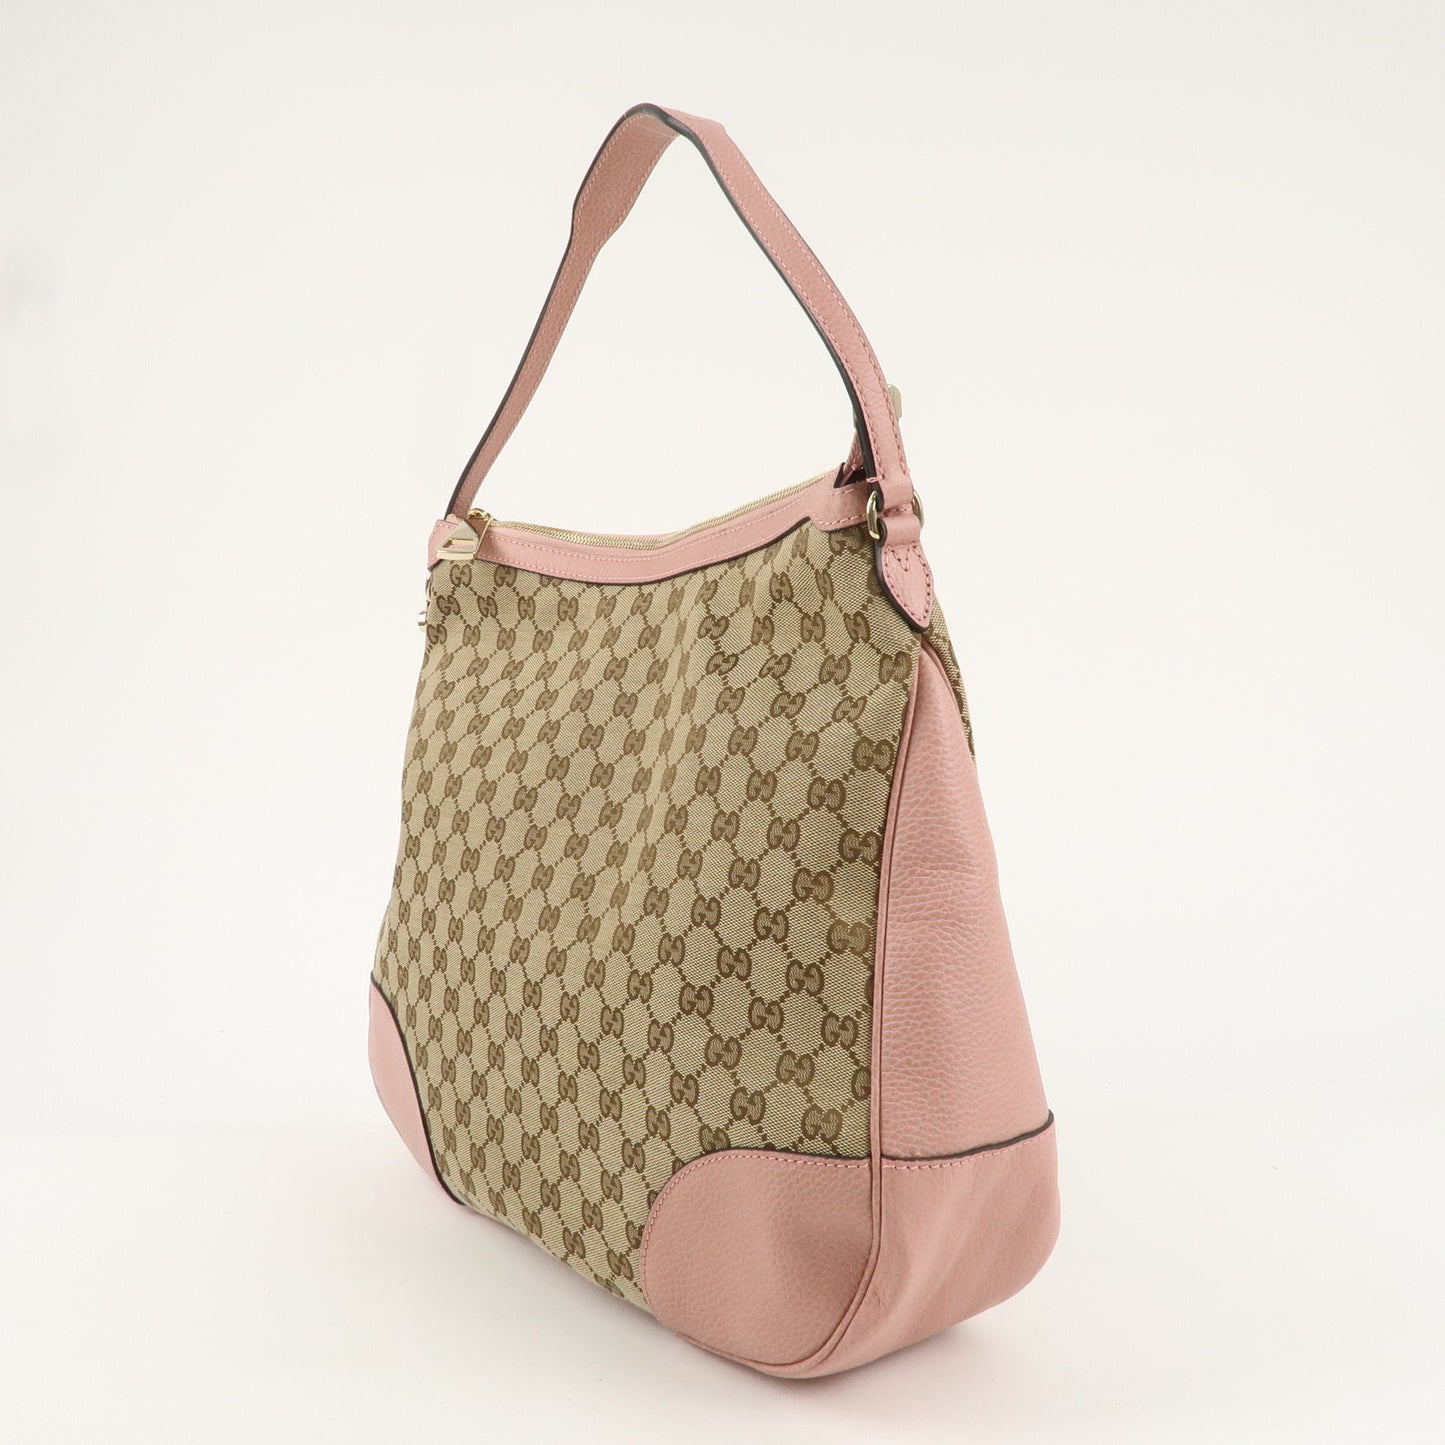 GUCCI GG Canvas Leather One Shoulder Bag Pink Beige 449244